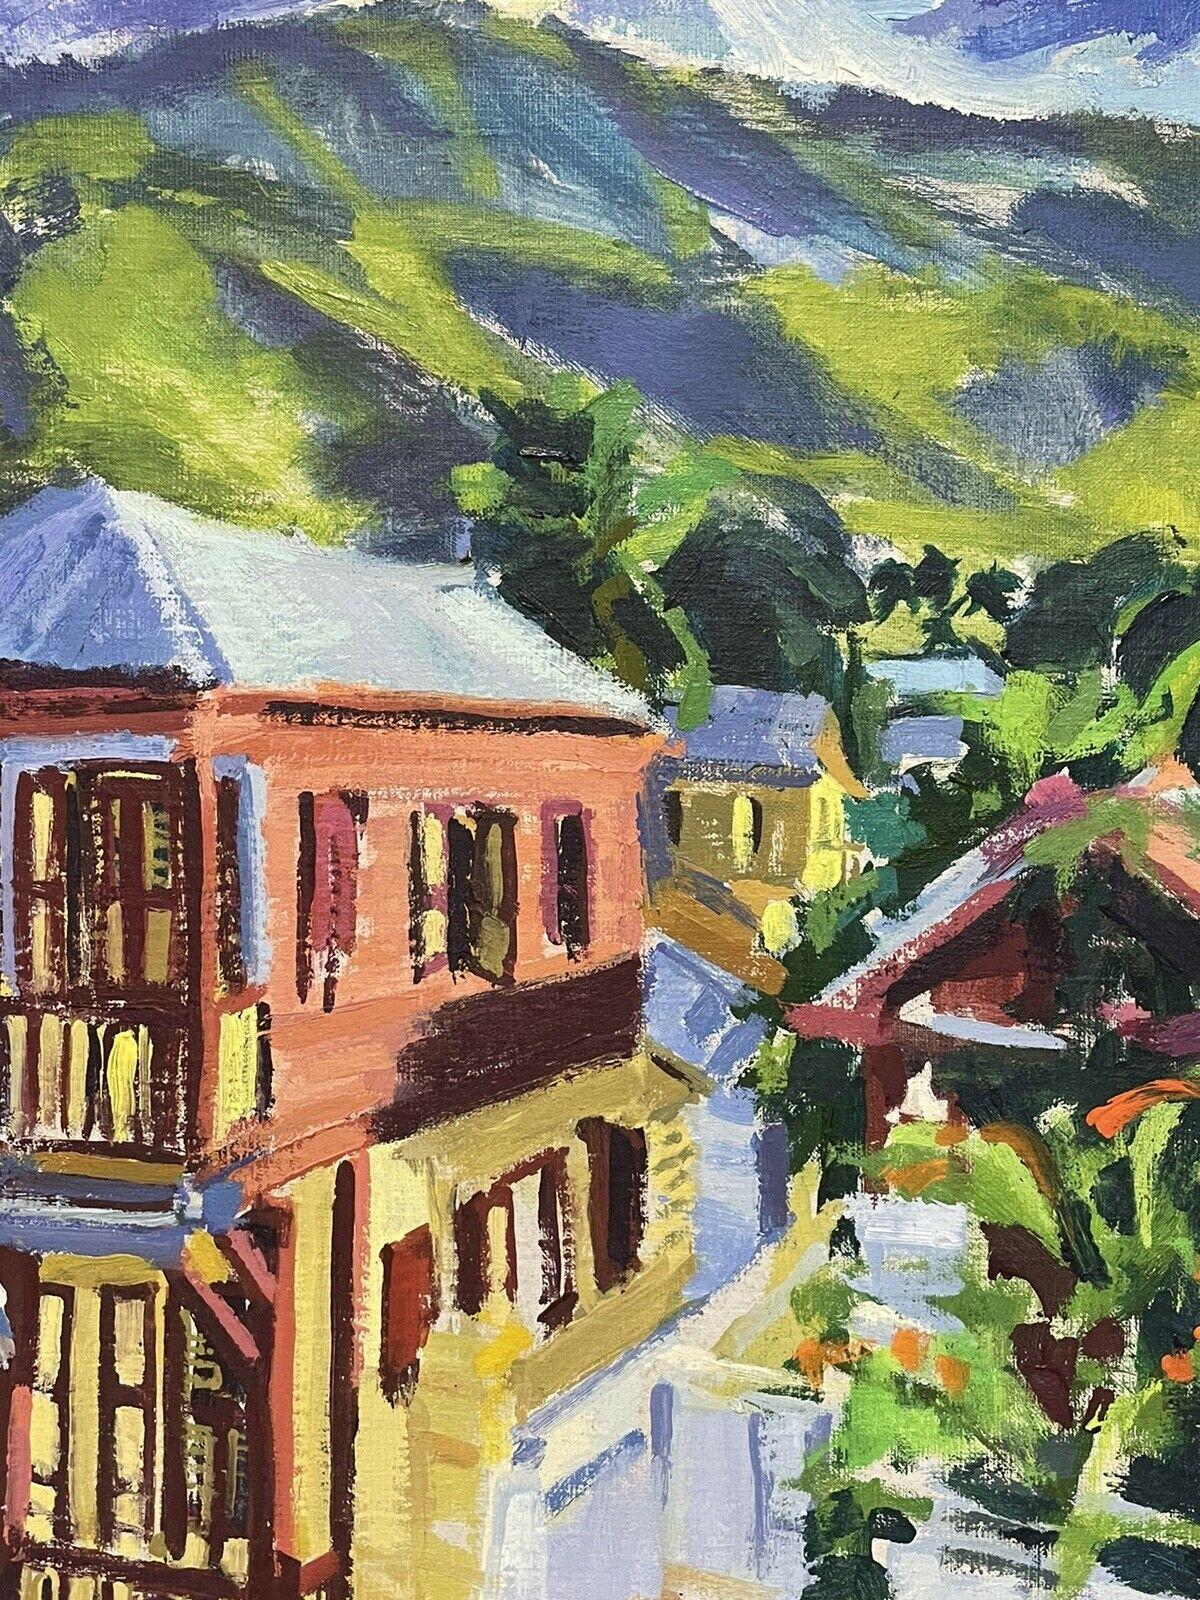 LARGE AMERICAN IMPRESSIONIST OIL PAINTING - PORT AU PRINCE HAITI LANDSCAPE - American Impressionist Painting by Douglas Stuart Allen